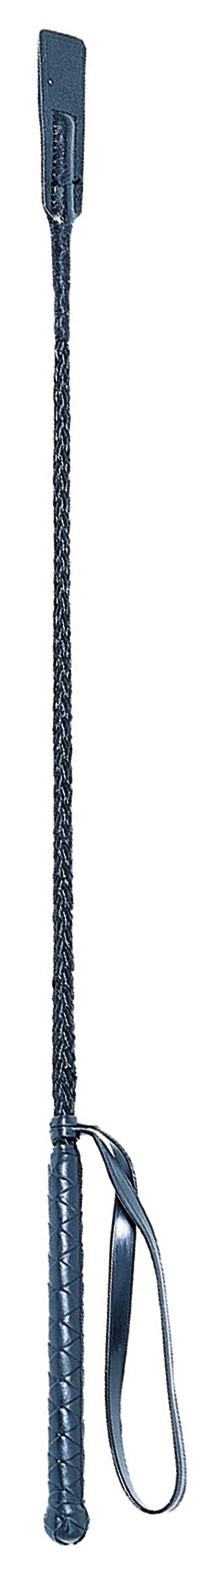 Kerbl Springstock mit Klatsche 65 cm